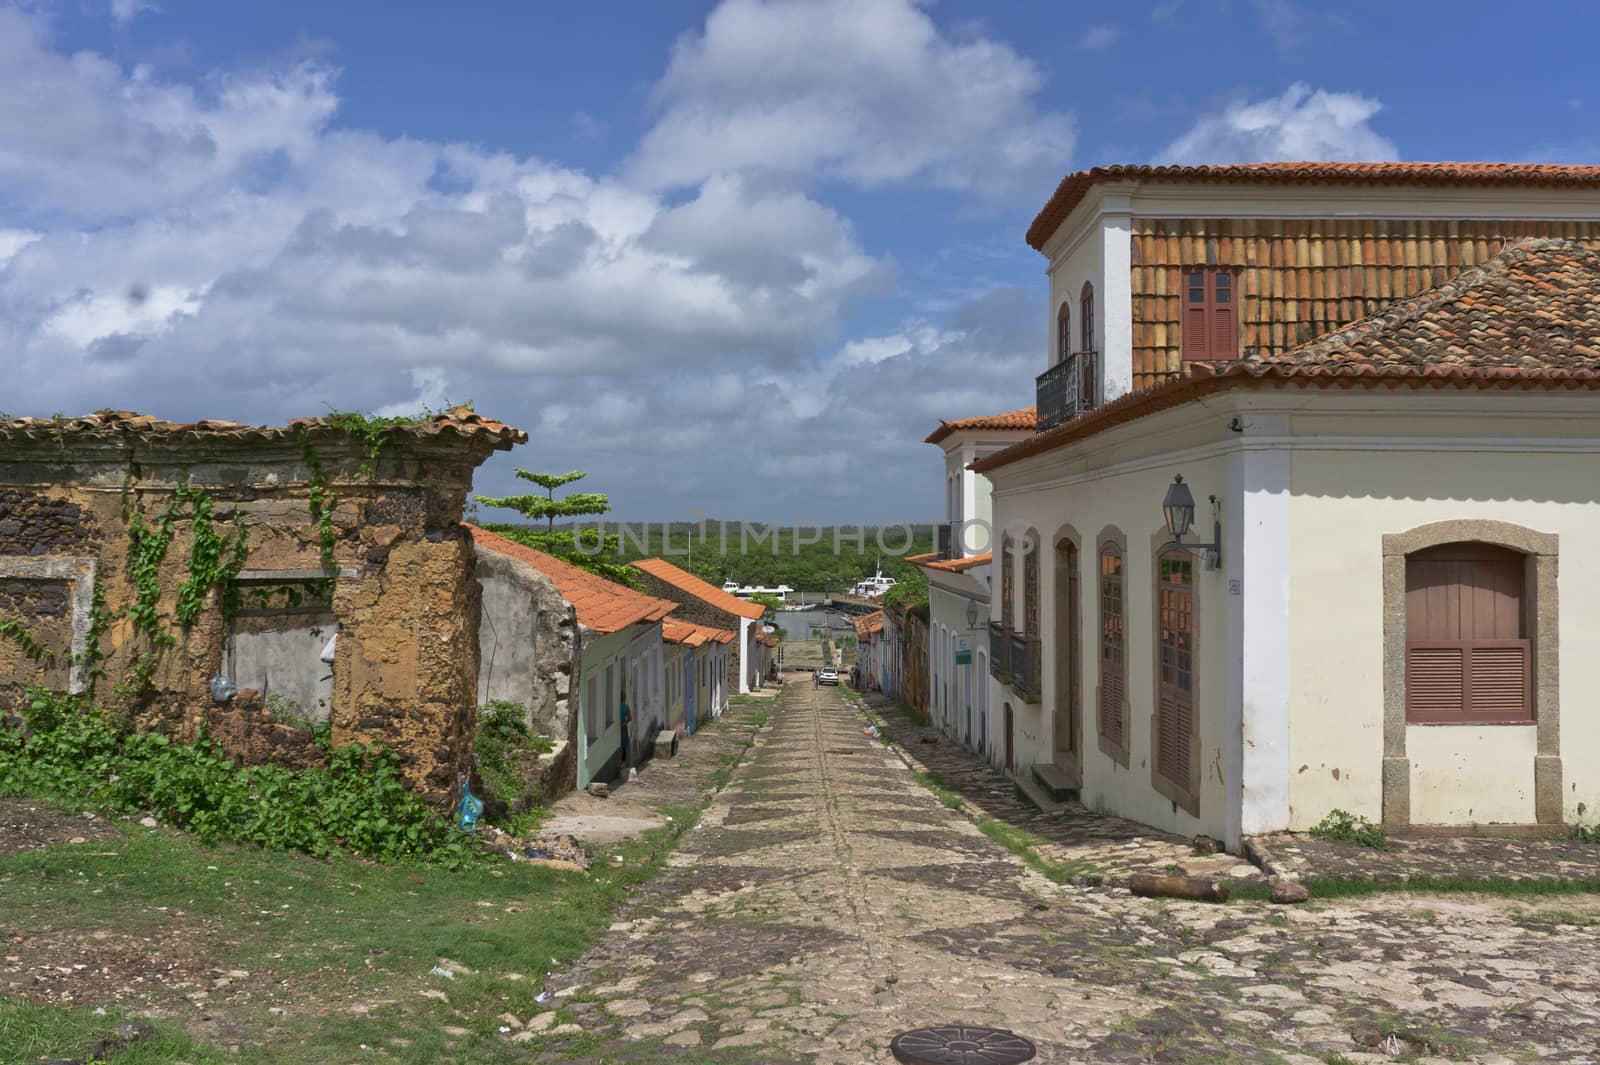 Alcantara, Brazil, South America